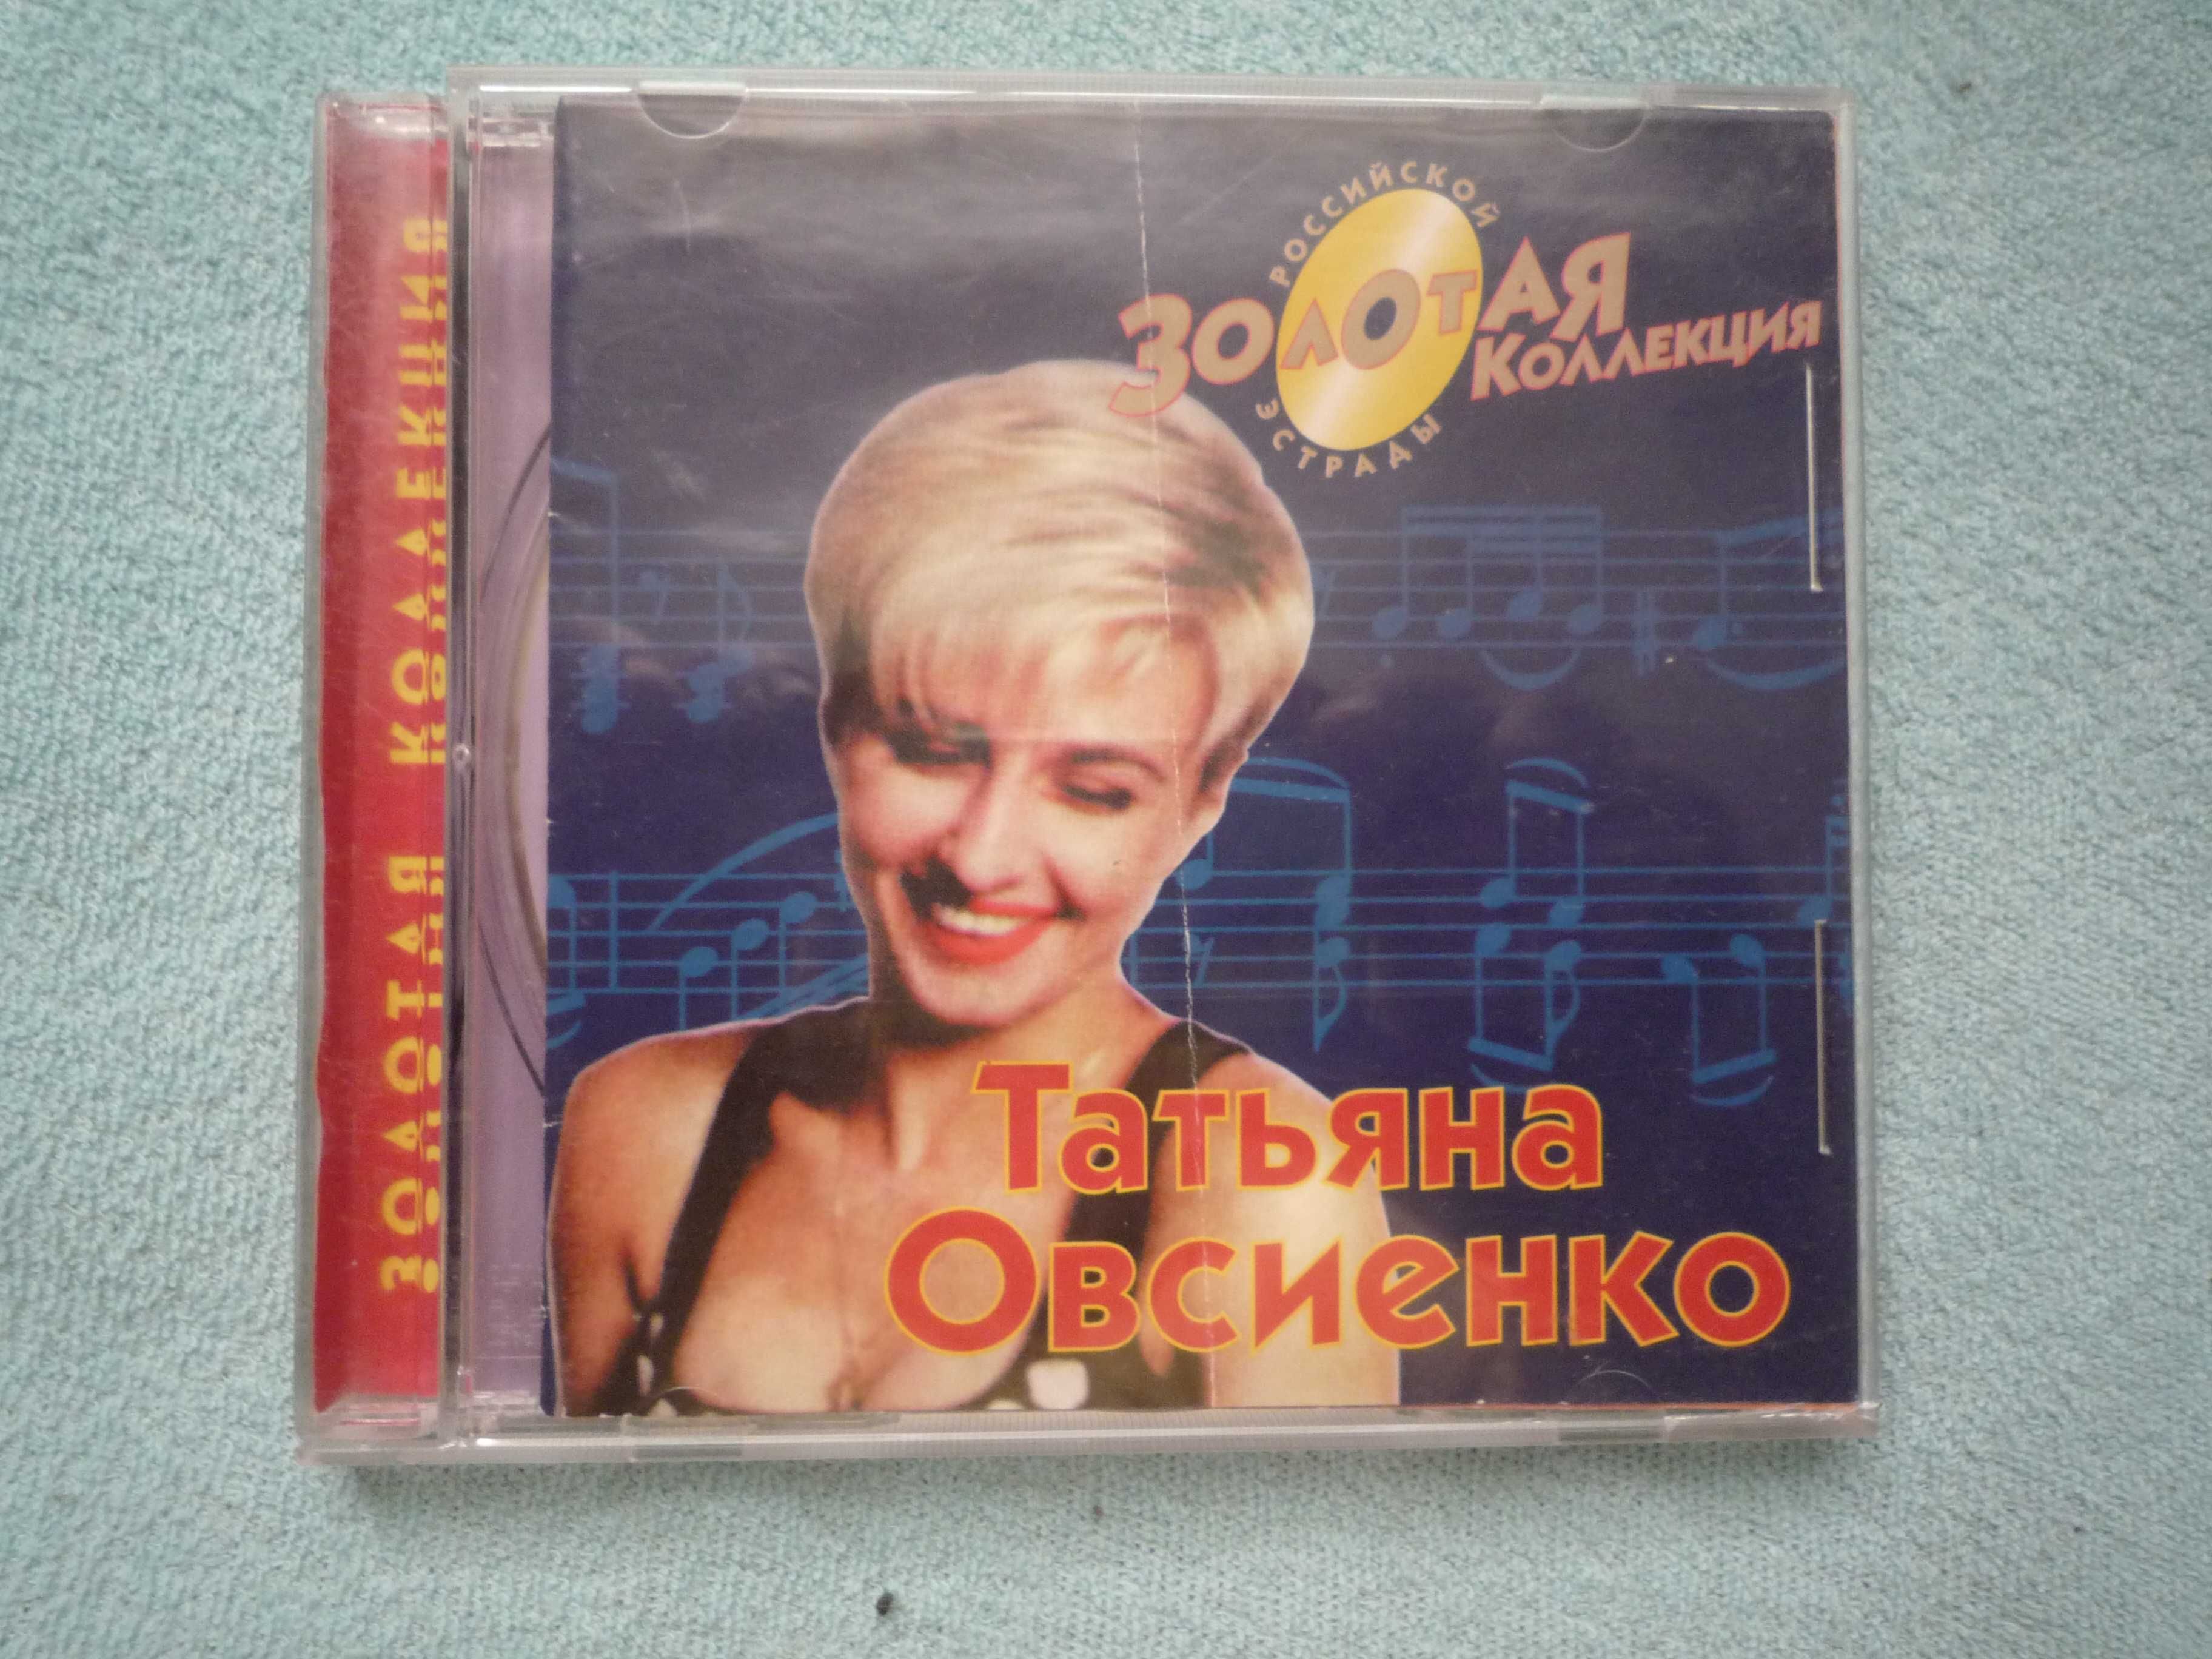 CD-диск-Татьяна Овсиенко